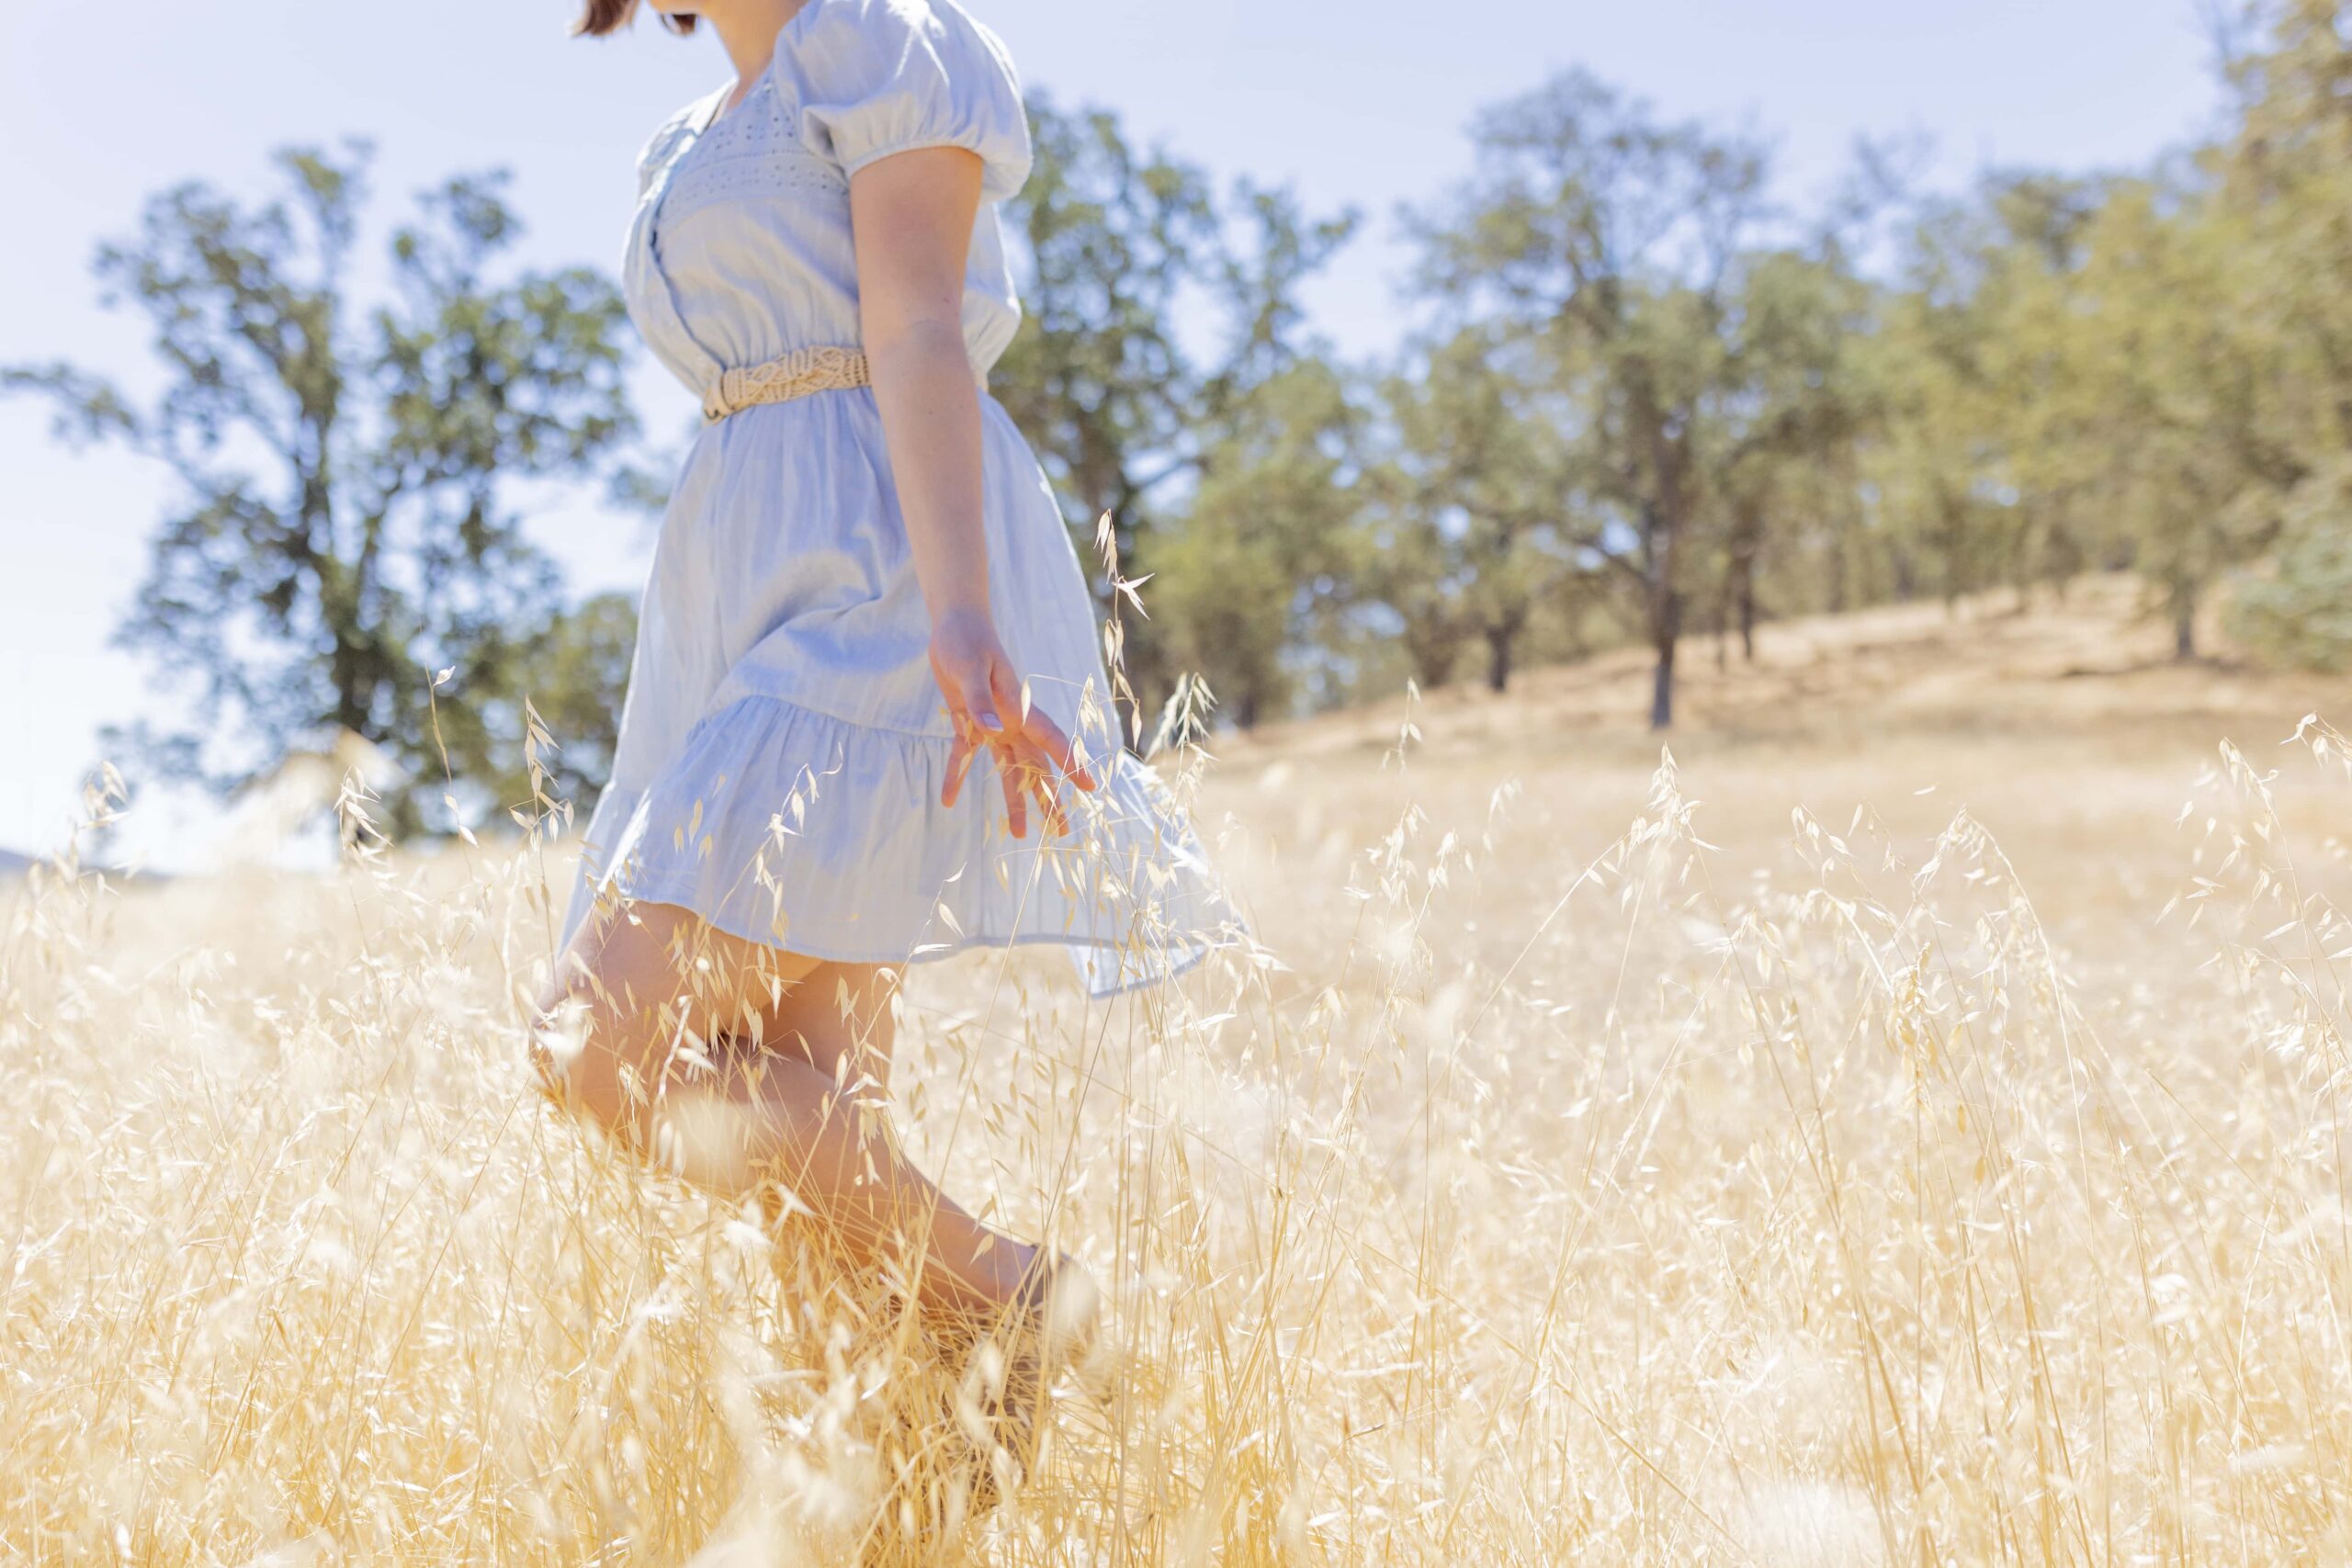 Senior girl walking through a grassy field